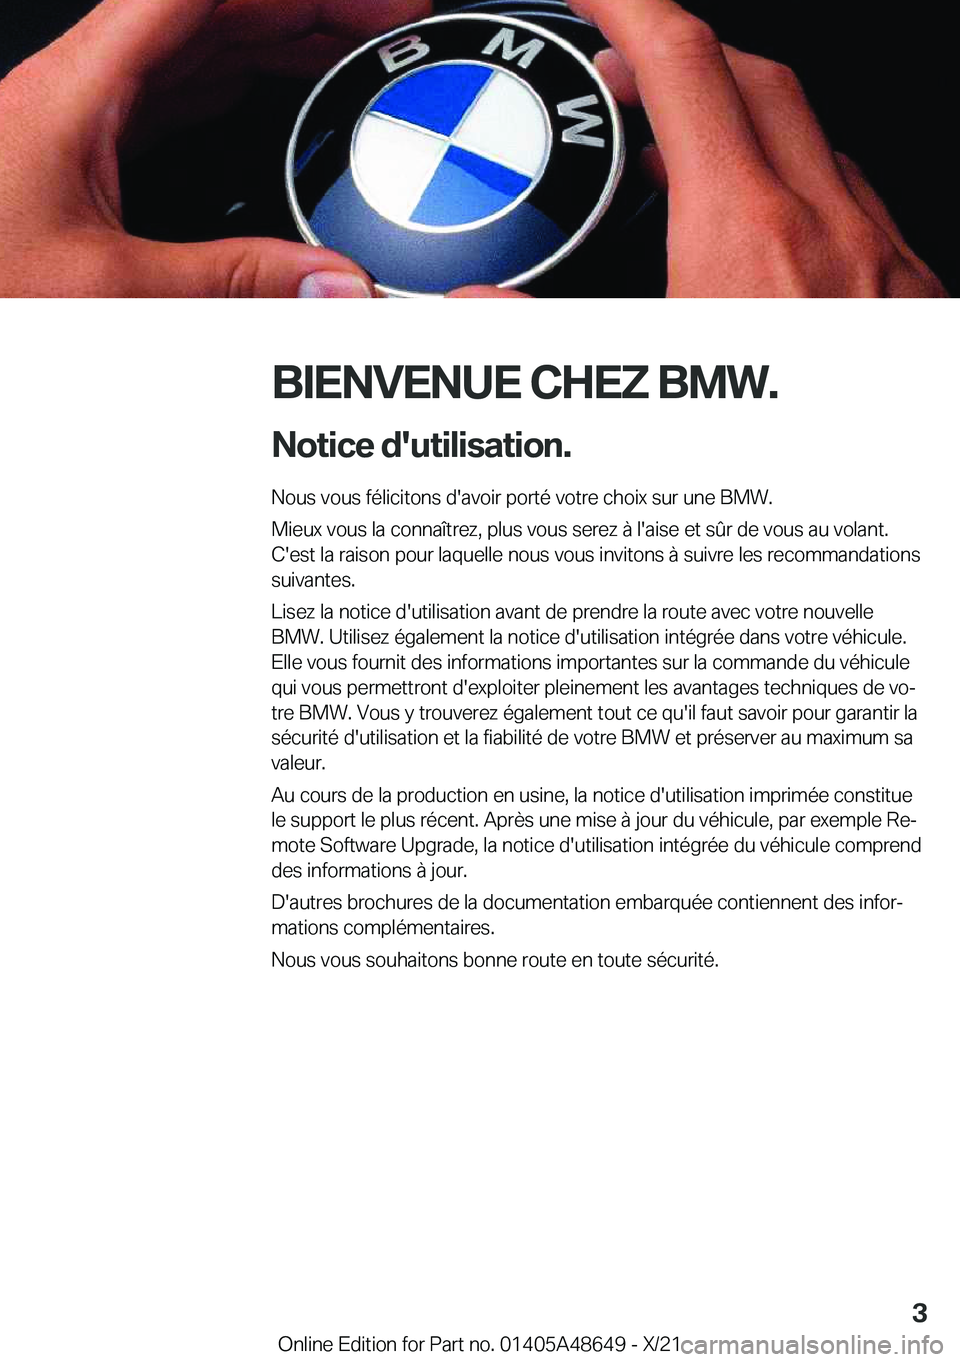 BMW 3 SERIES 2022  Notices Demploi (in French) �B�I�E�N�V�E�N�U�E��C�H�E�Z��B�M�W�.�N�o�t�i�c�e��d�'�u�t�i�l�i�s�a�t�i�o�n�.
�N�o�u�s��v�o�u�s��f�é�l�i�c�i�t�o�n�s��d�'�a�v�o�i�r��p�o�r�t�é��v�o�t�r�e��c�h�o�i�x��s�u�r��u�n�e�